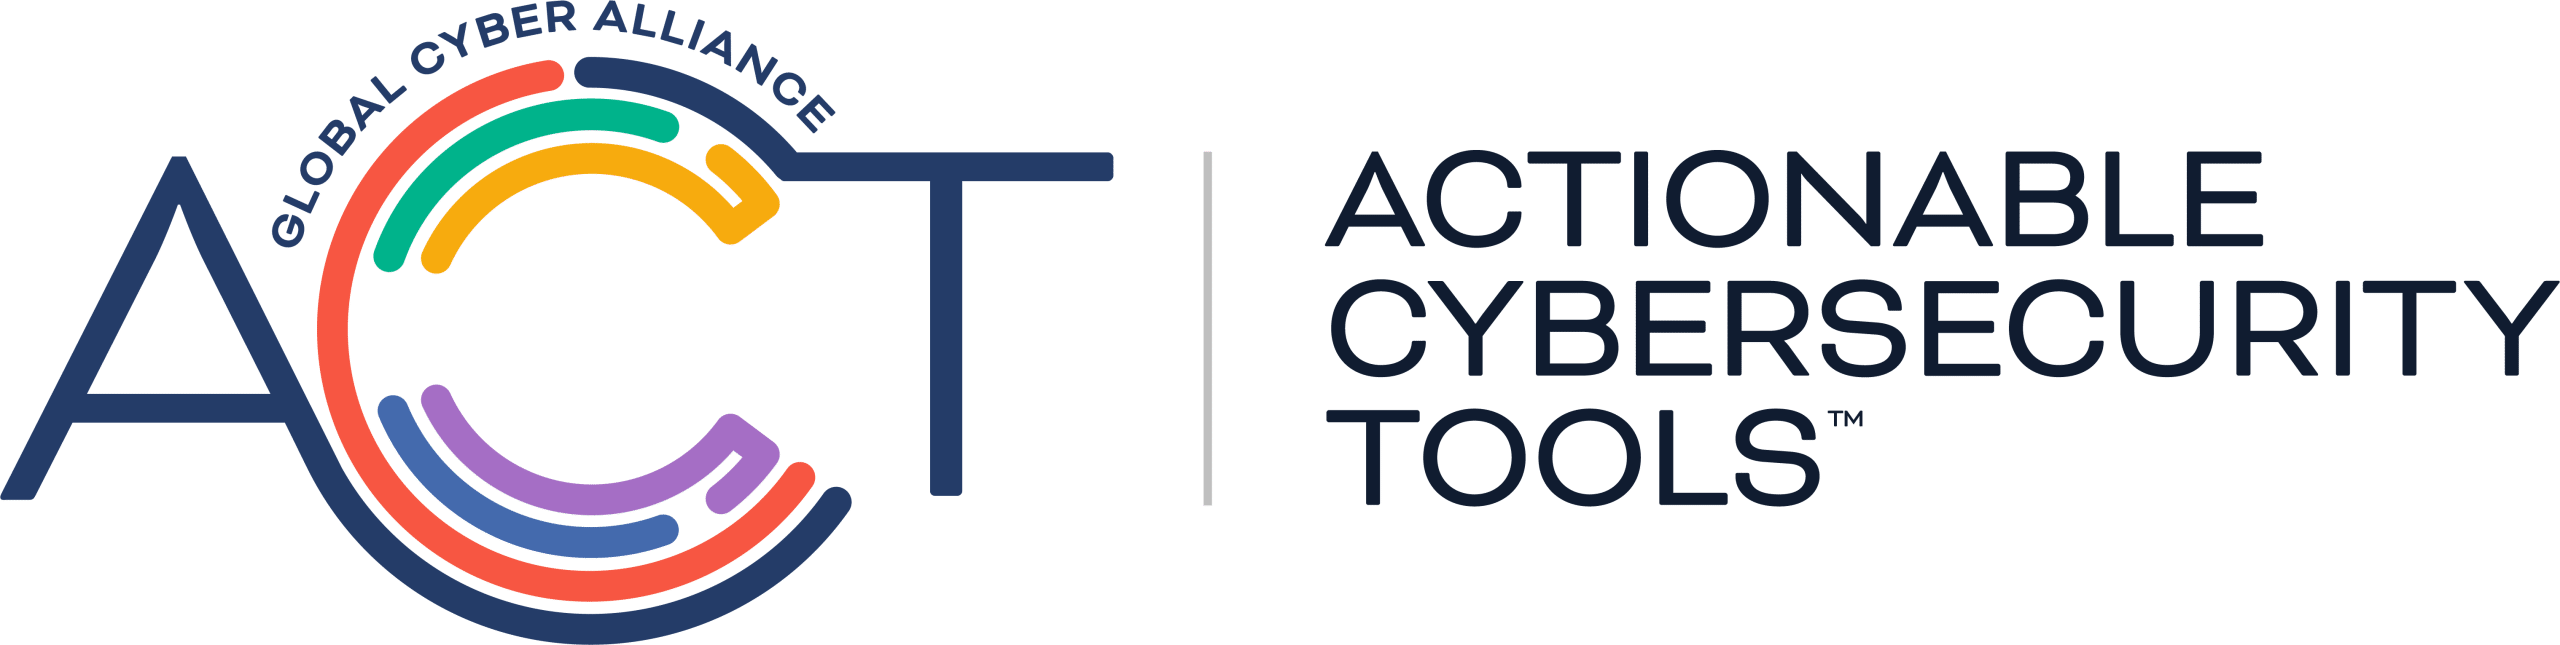 ACT full logo